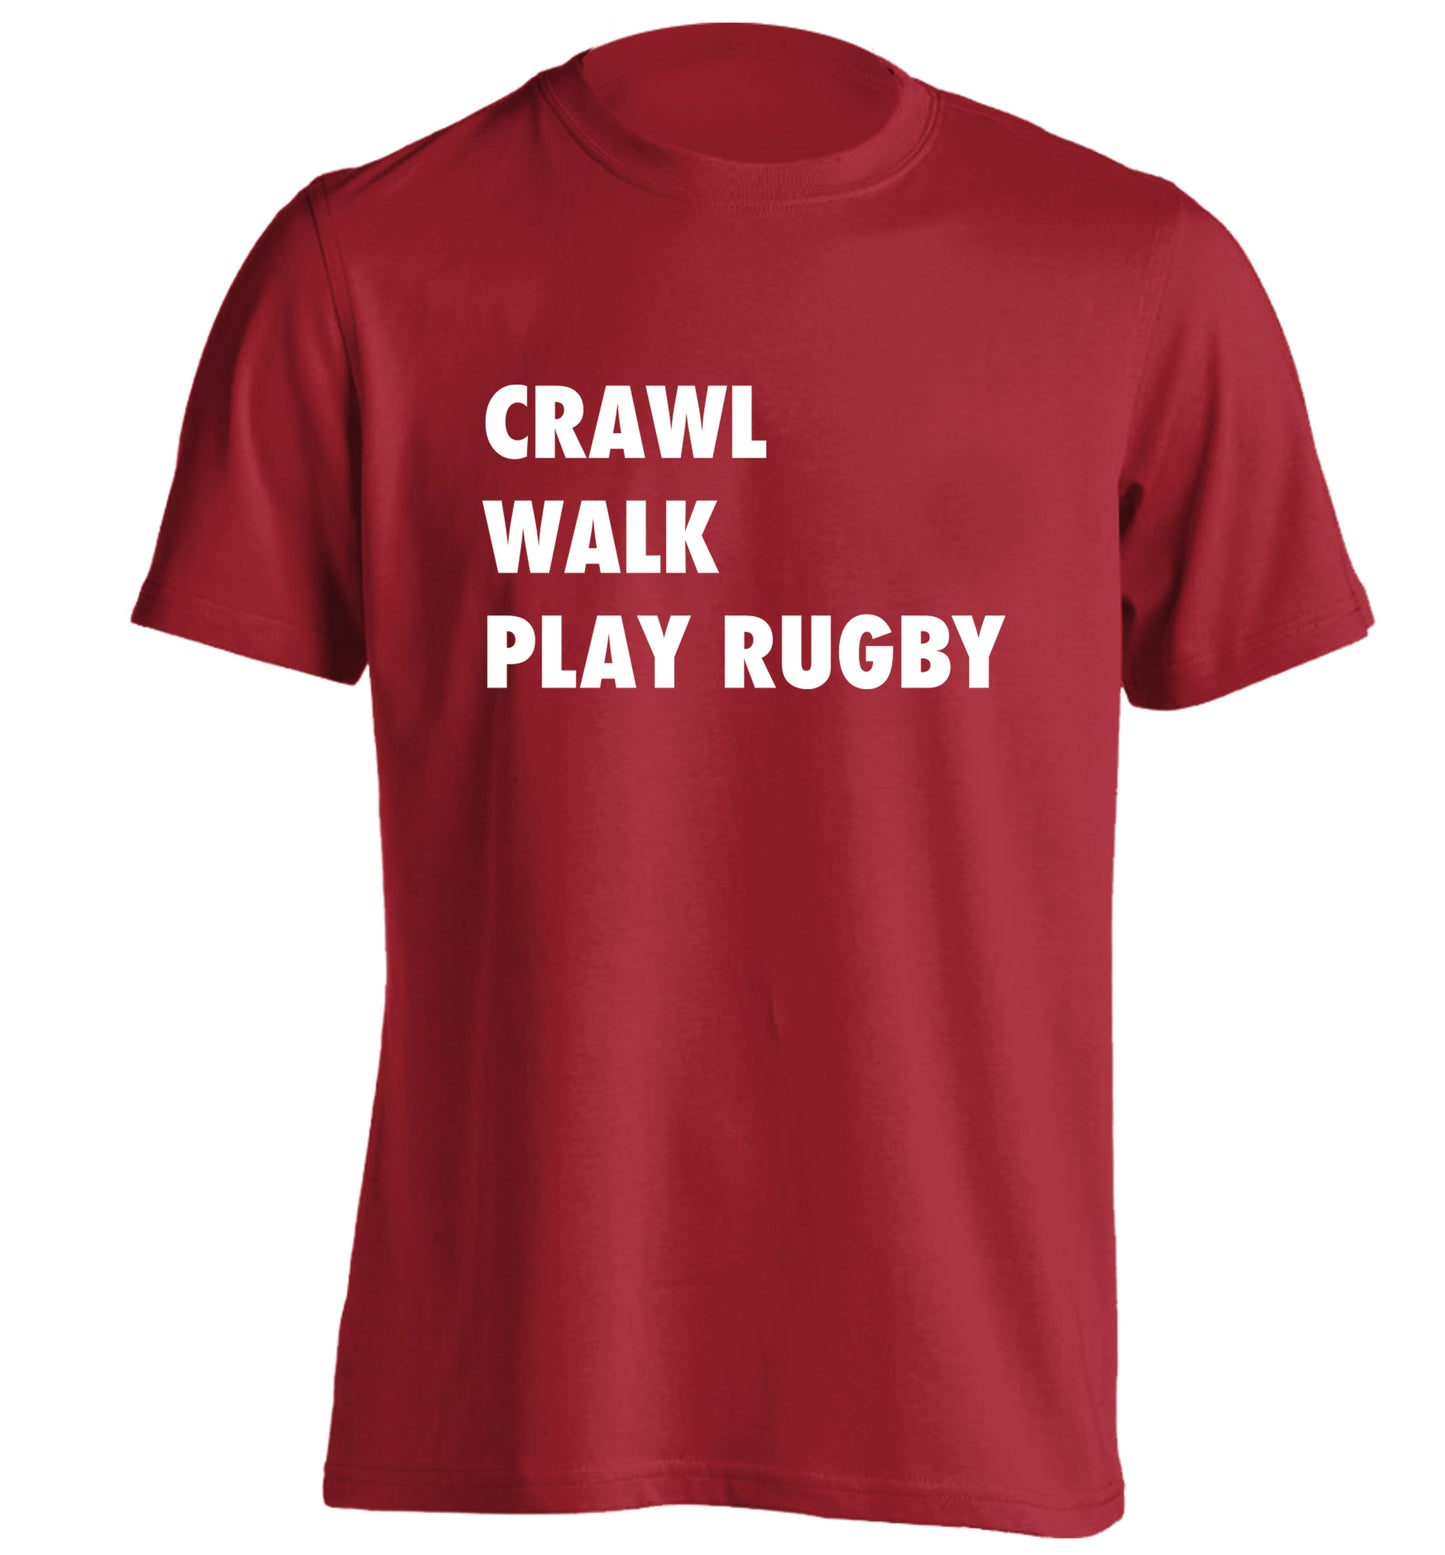 Eat, sleep, play rugby adults unisex red Tshirt 2XL